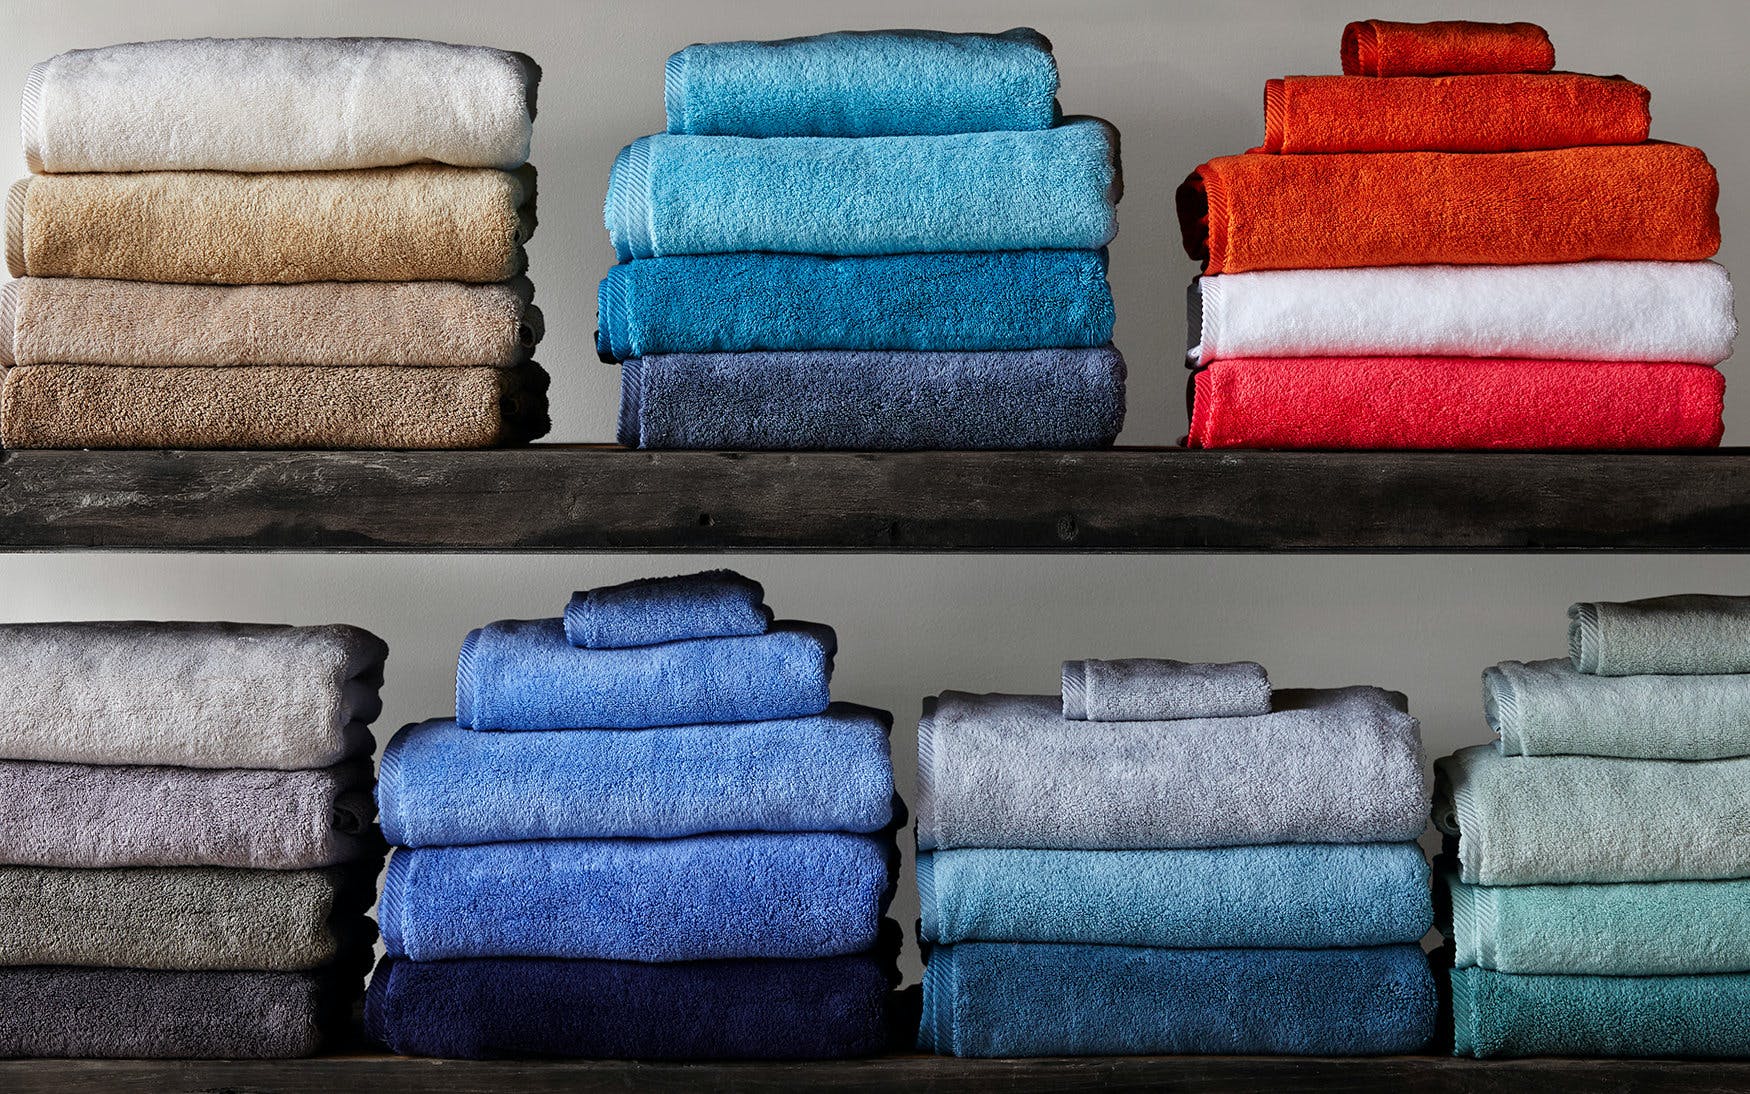 https://www.earthsake.com/store/media/MicroCotton-Towels-Milagro-All-Colors.jpg